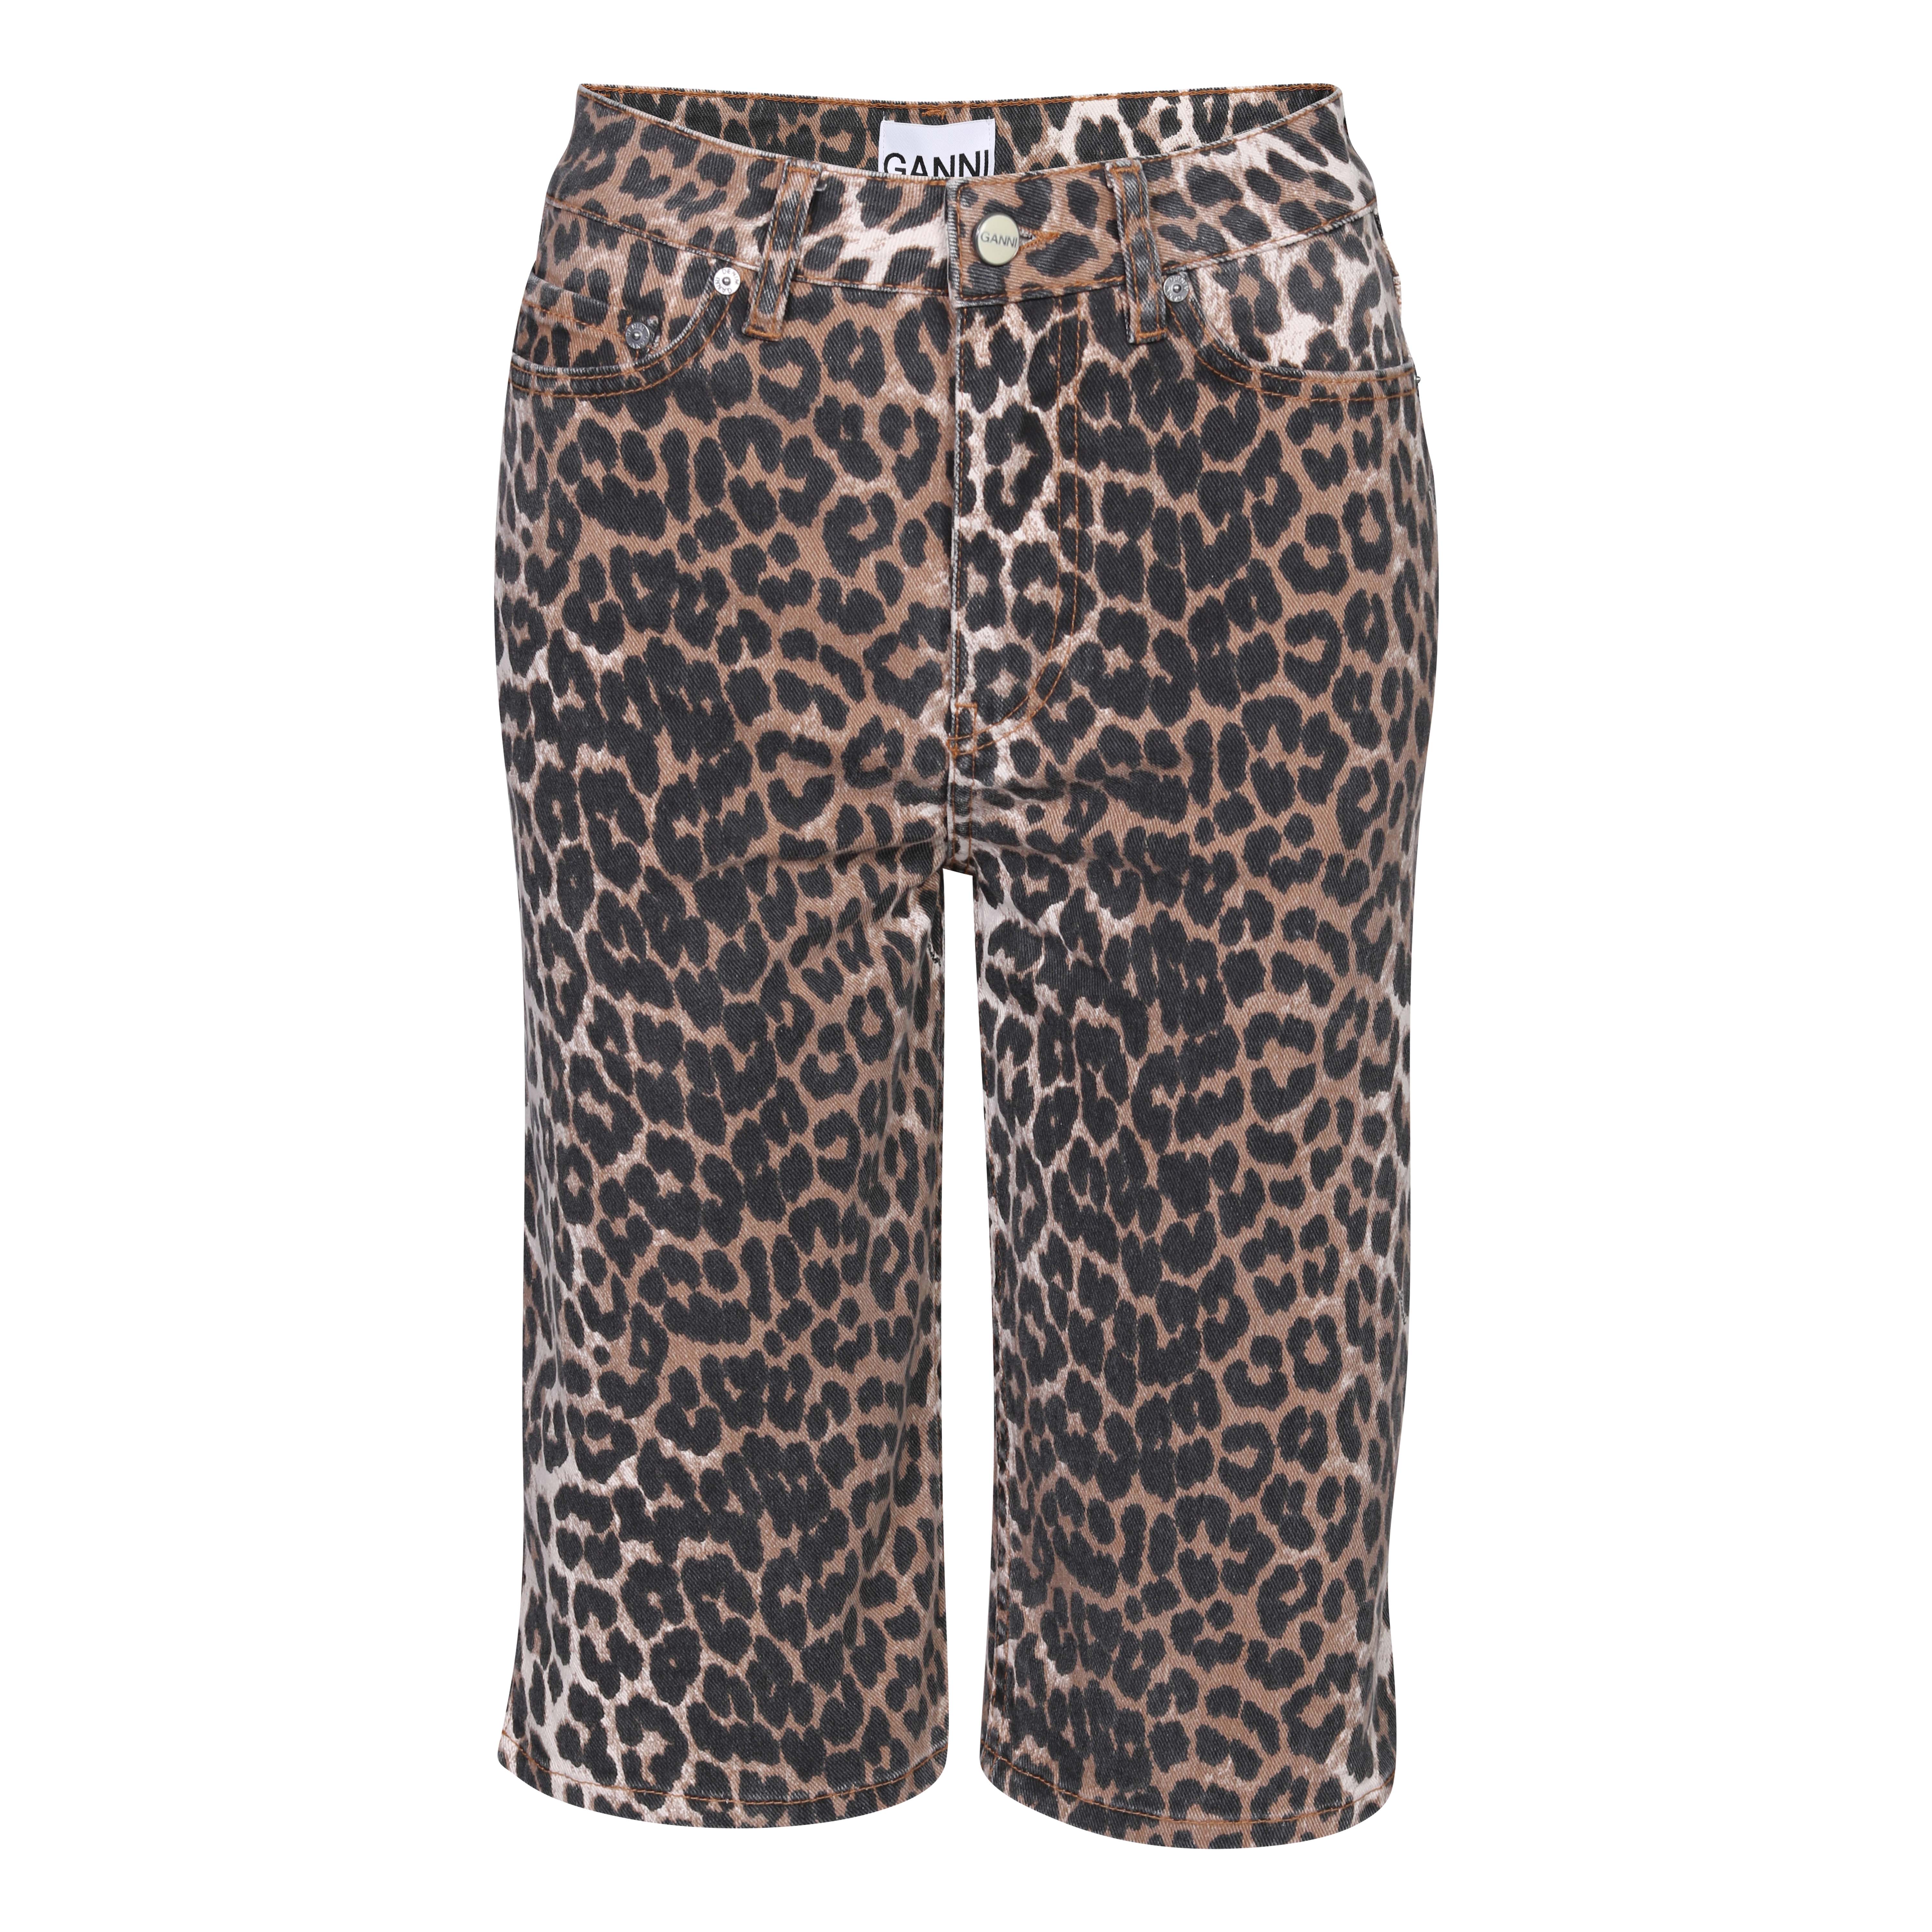 Ganni Knee Length Denim Shorts in Leopard